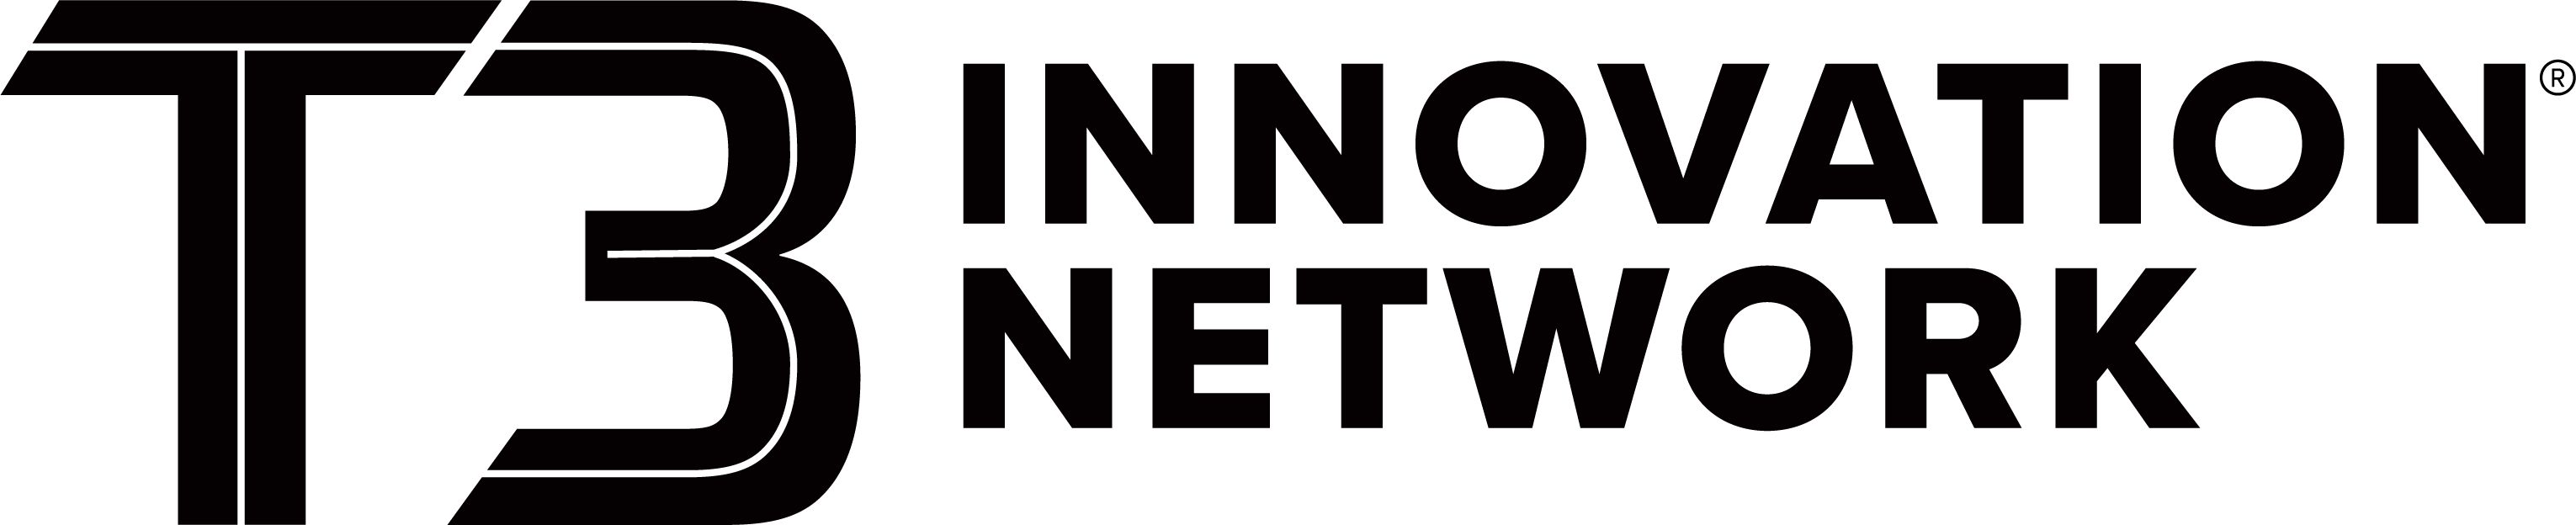 T3 Innovation Network